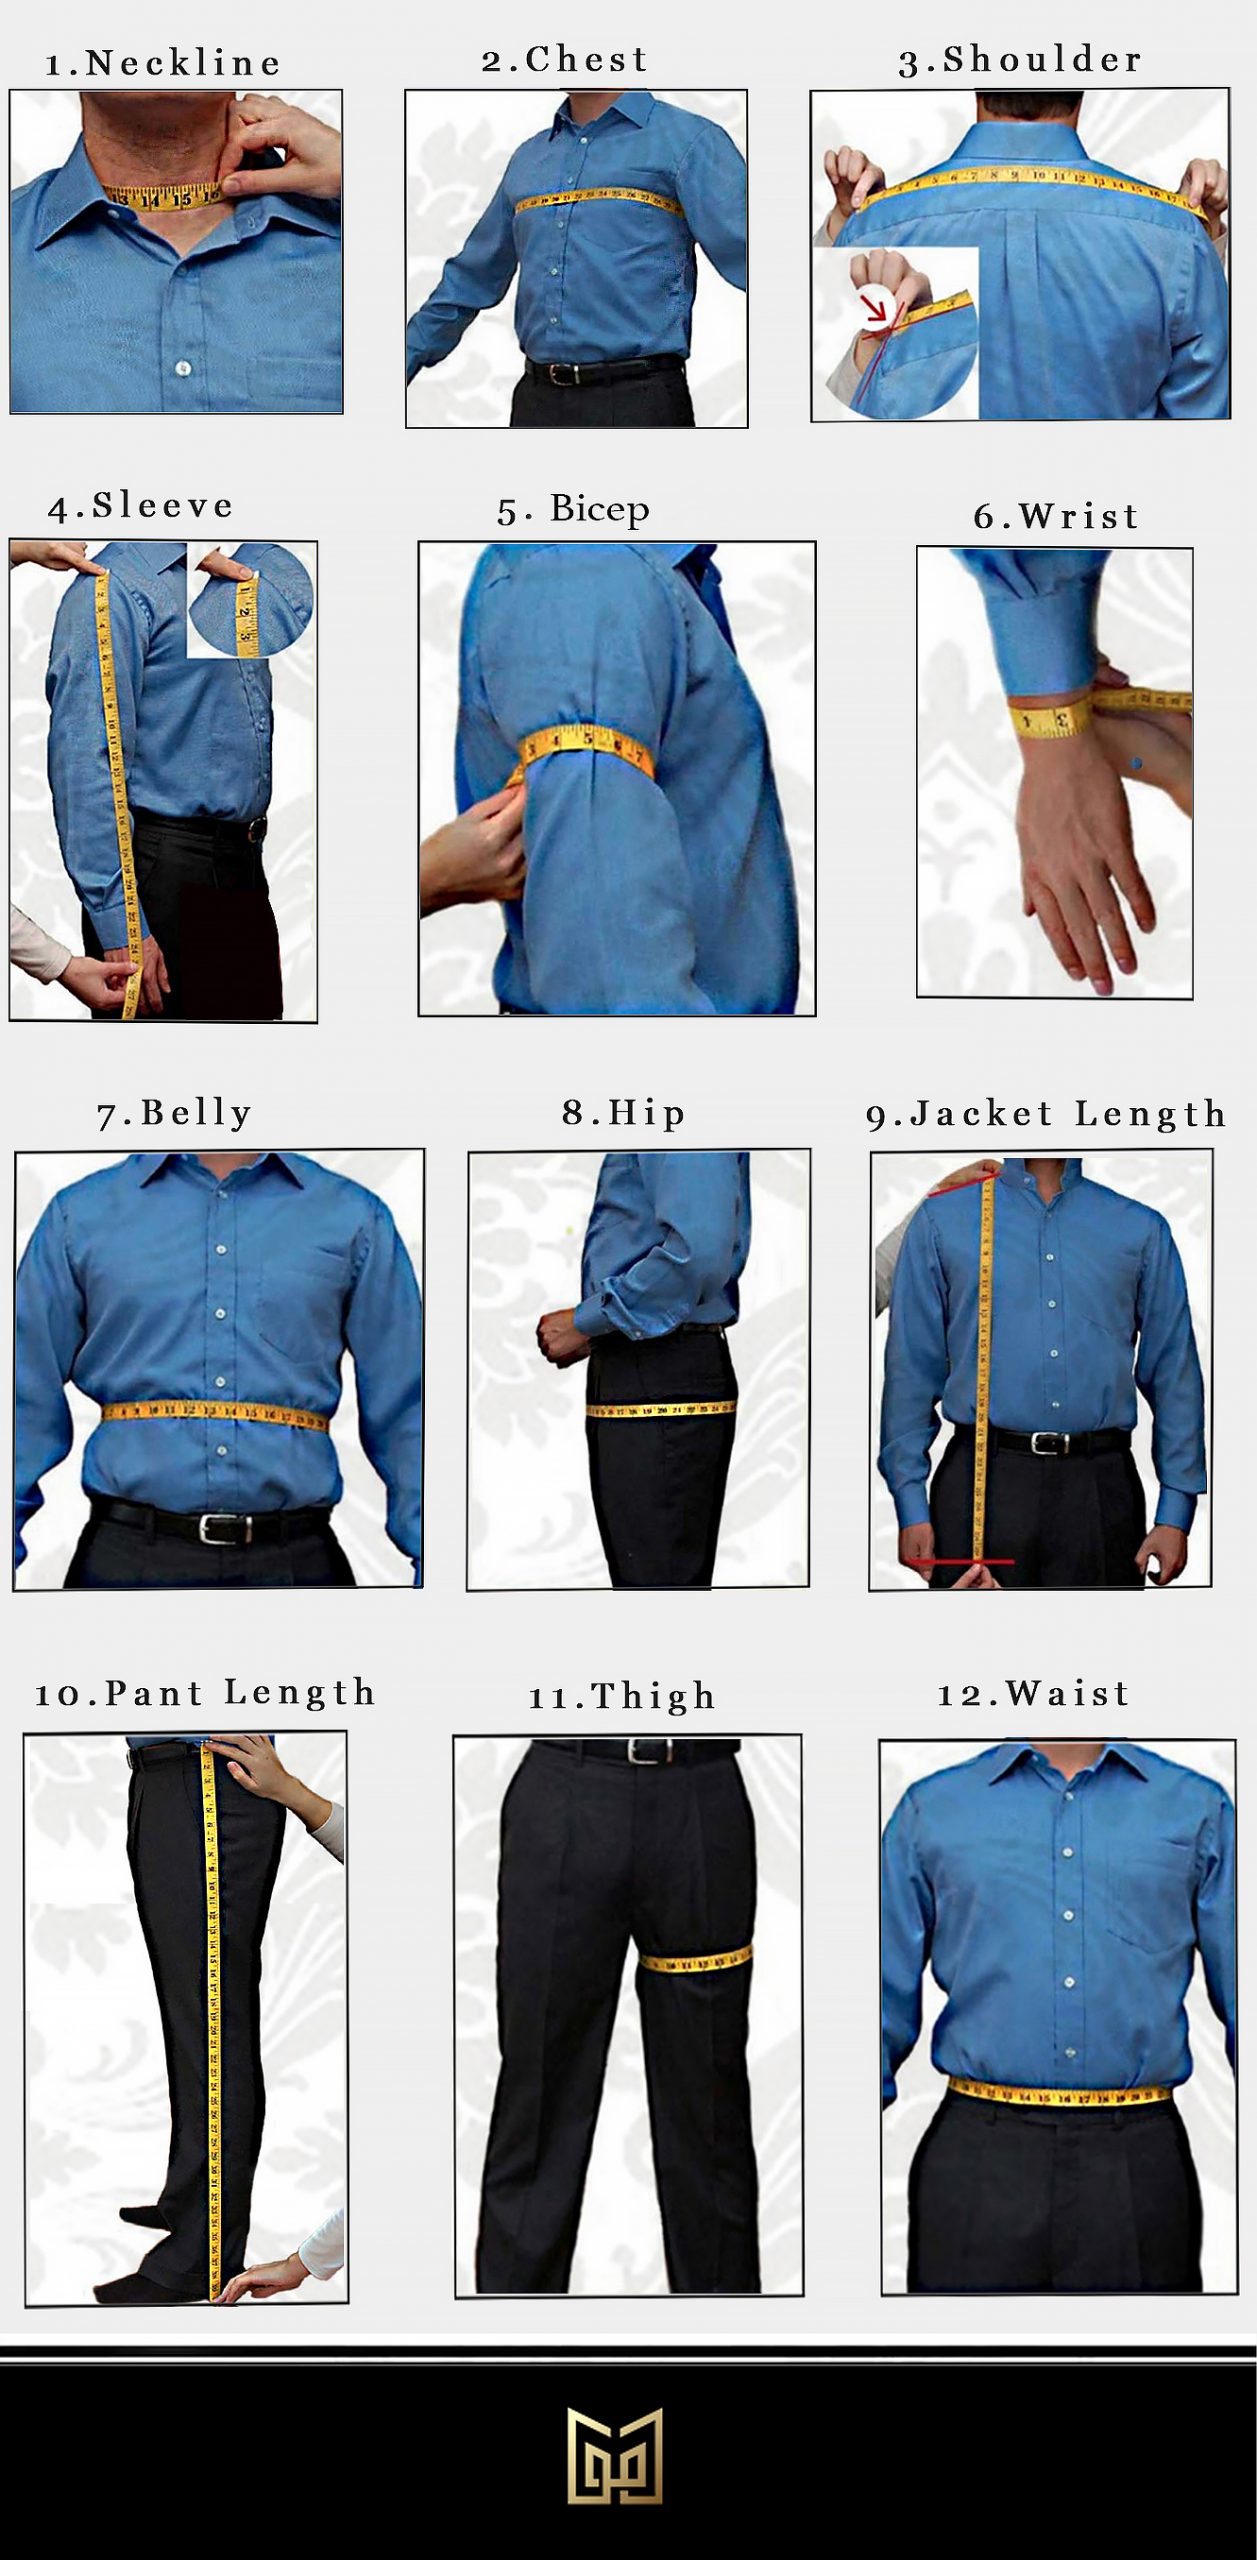 Custom-Size-Guide-from-Gentlemansguru.com